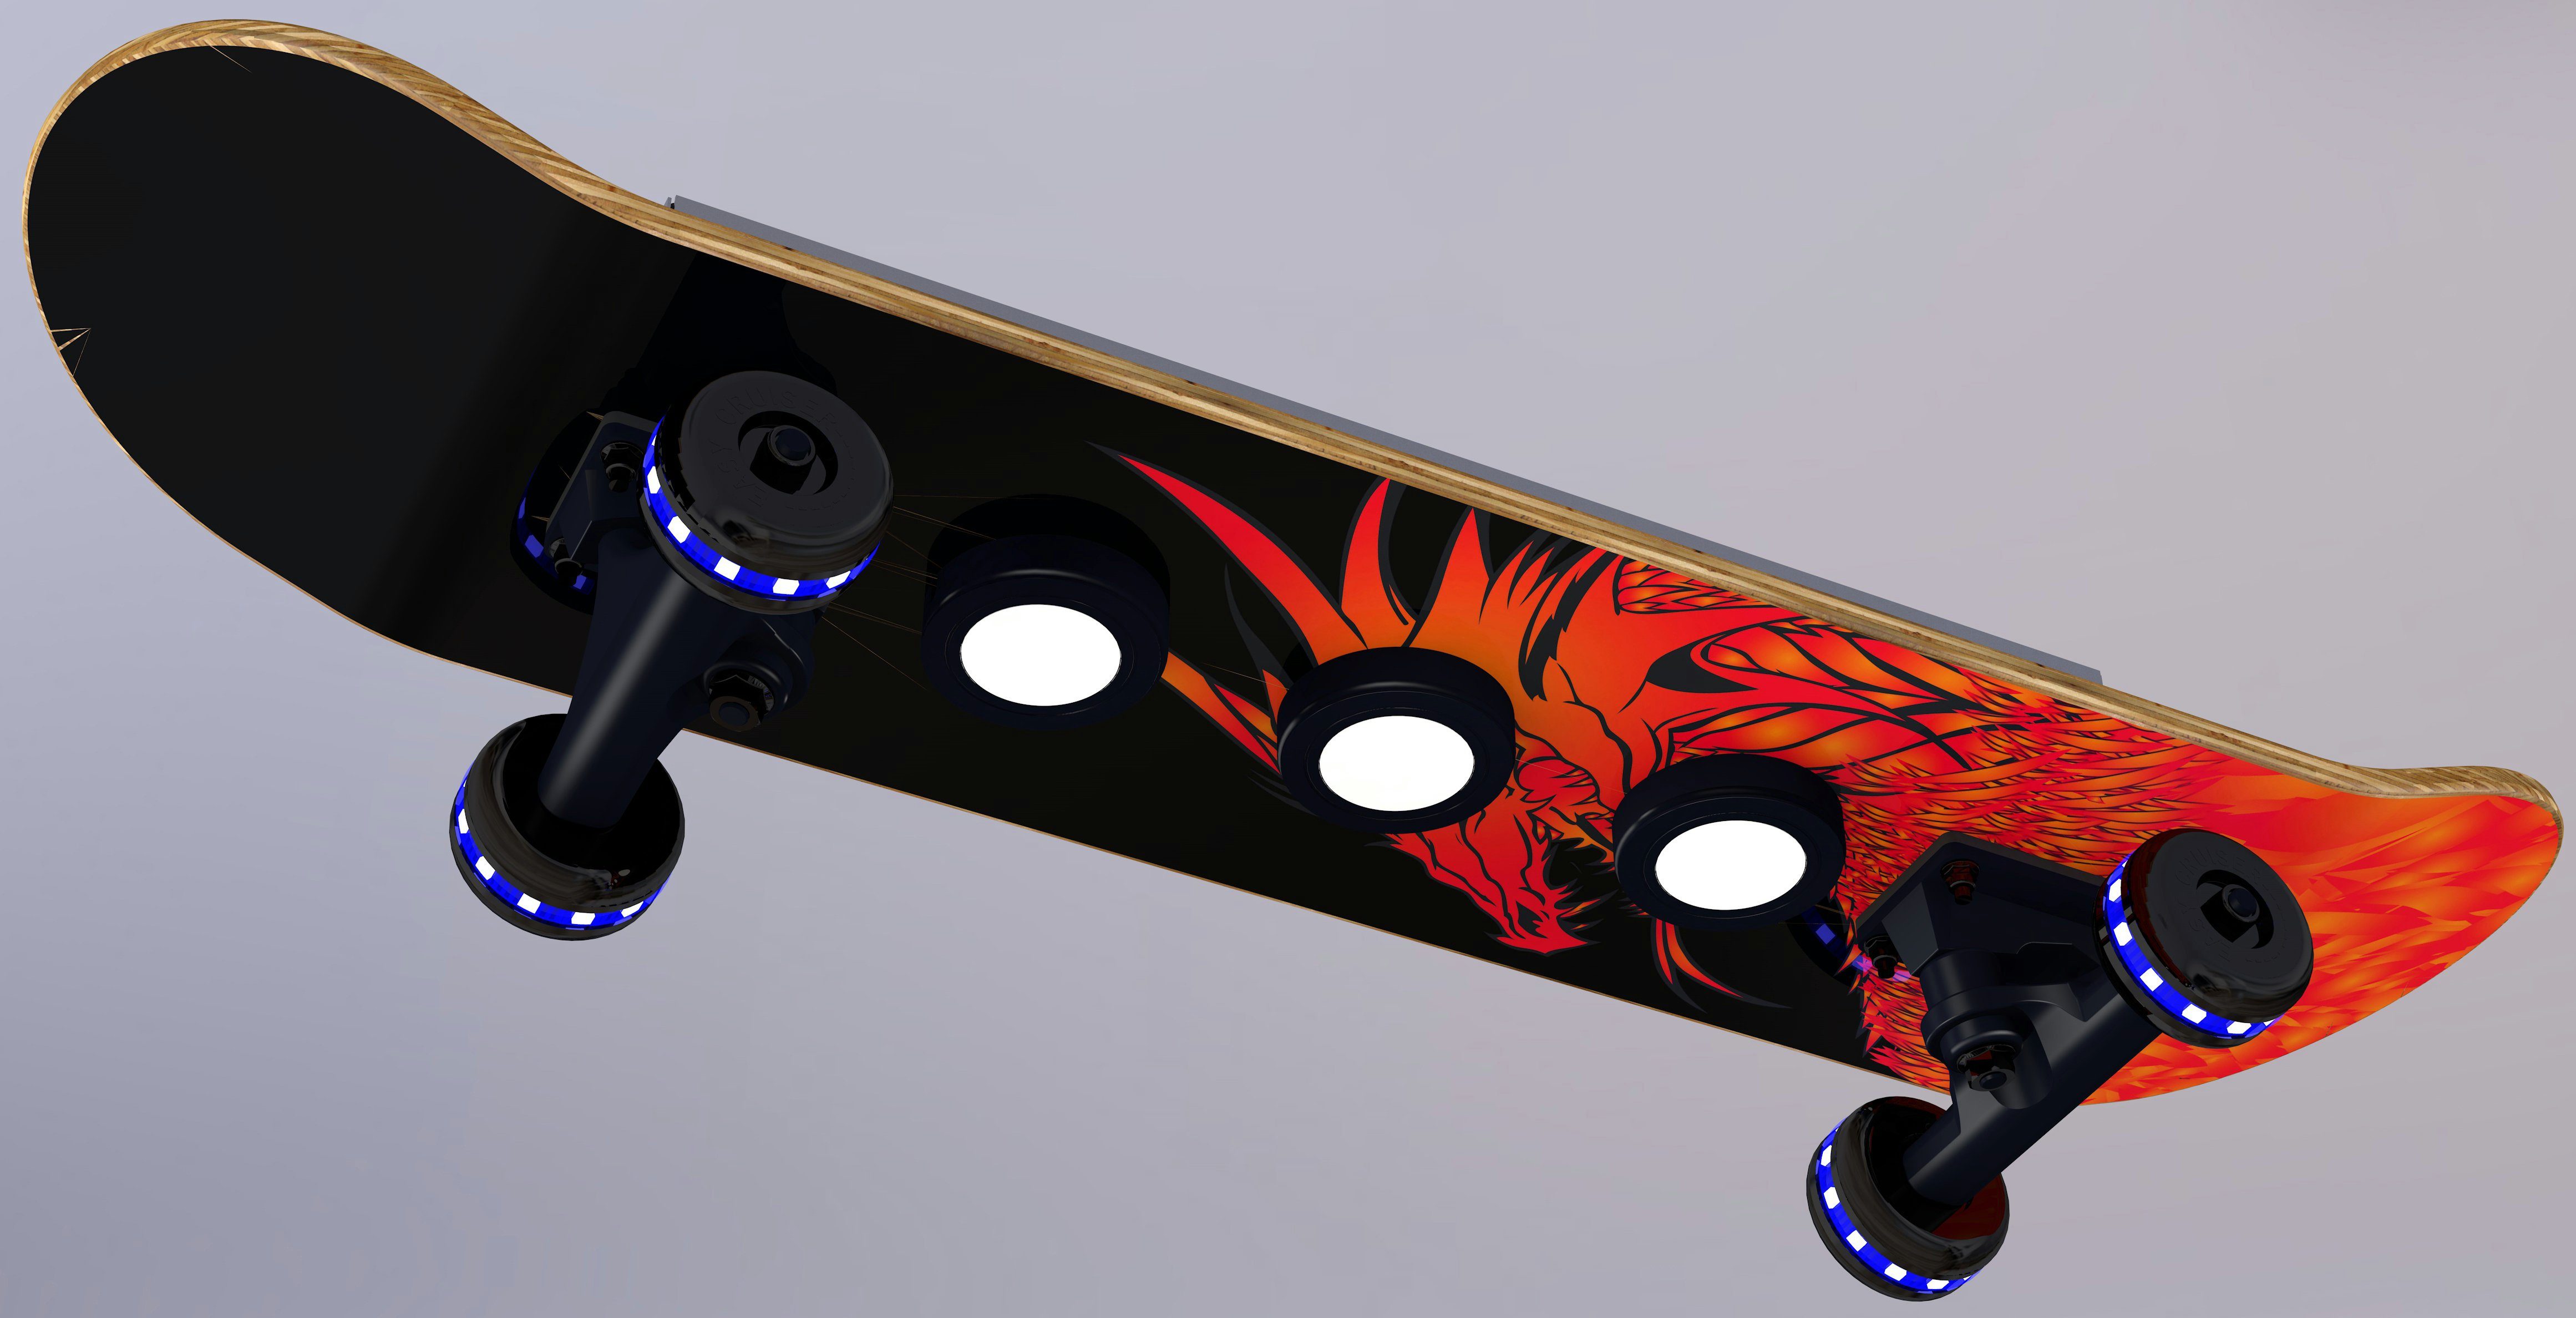 EVOTEC LED Farbwechsel, Skateboard-Design, Deckenleuchte integriert, Dimmfunktion, Rollen Warmweiß, LED Dragon, Wheels Cruiser, - Easy fest